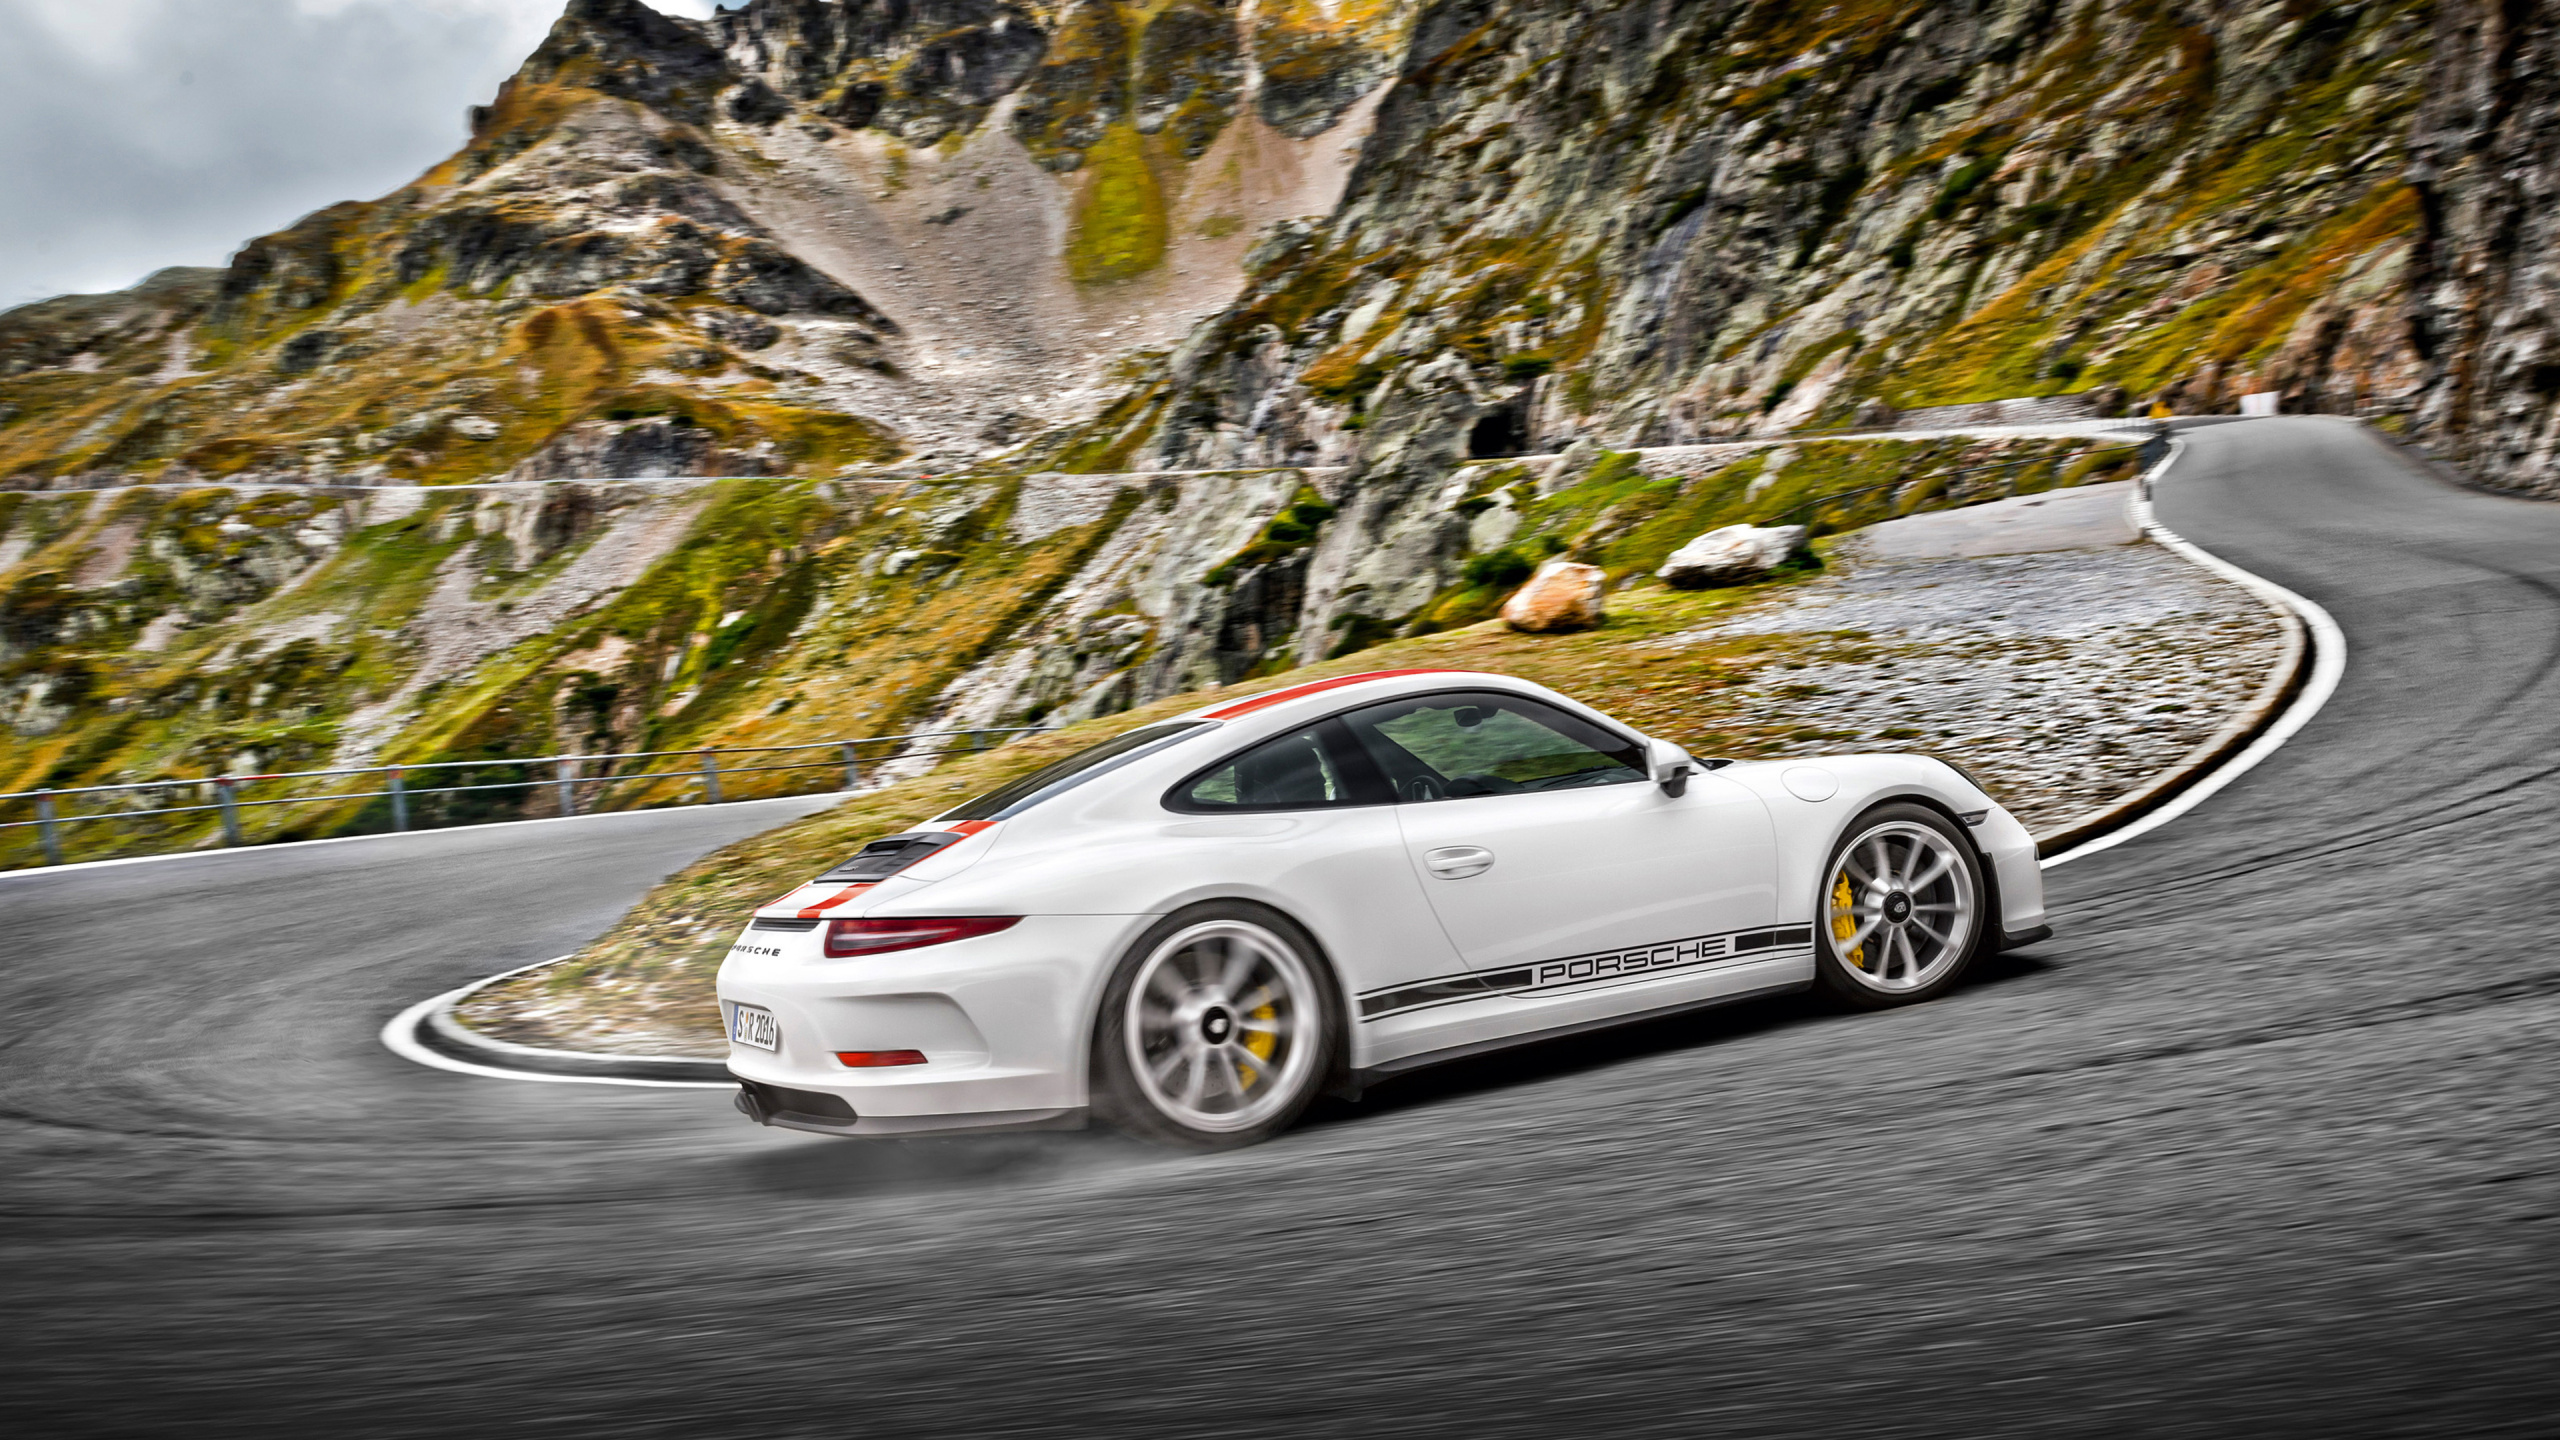 Porsche 911 Blanco en la Carretera. Wallpaper in 2560x1440 Resolution